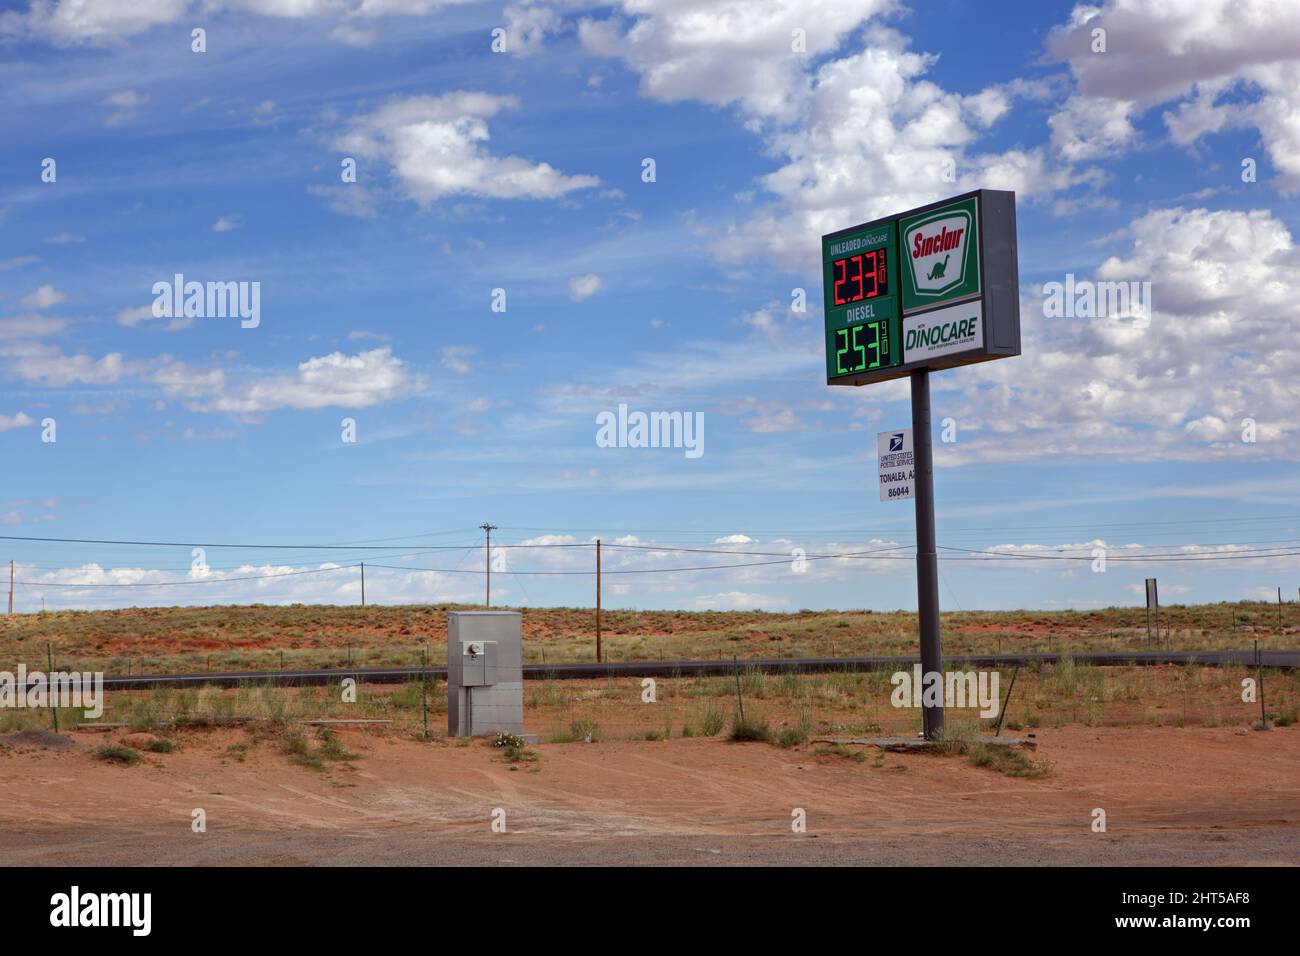 A Sinclair gas station sign on a pole breaks the horizon in the desert at Tonalea, Arizona 86044, USA Stock Photo